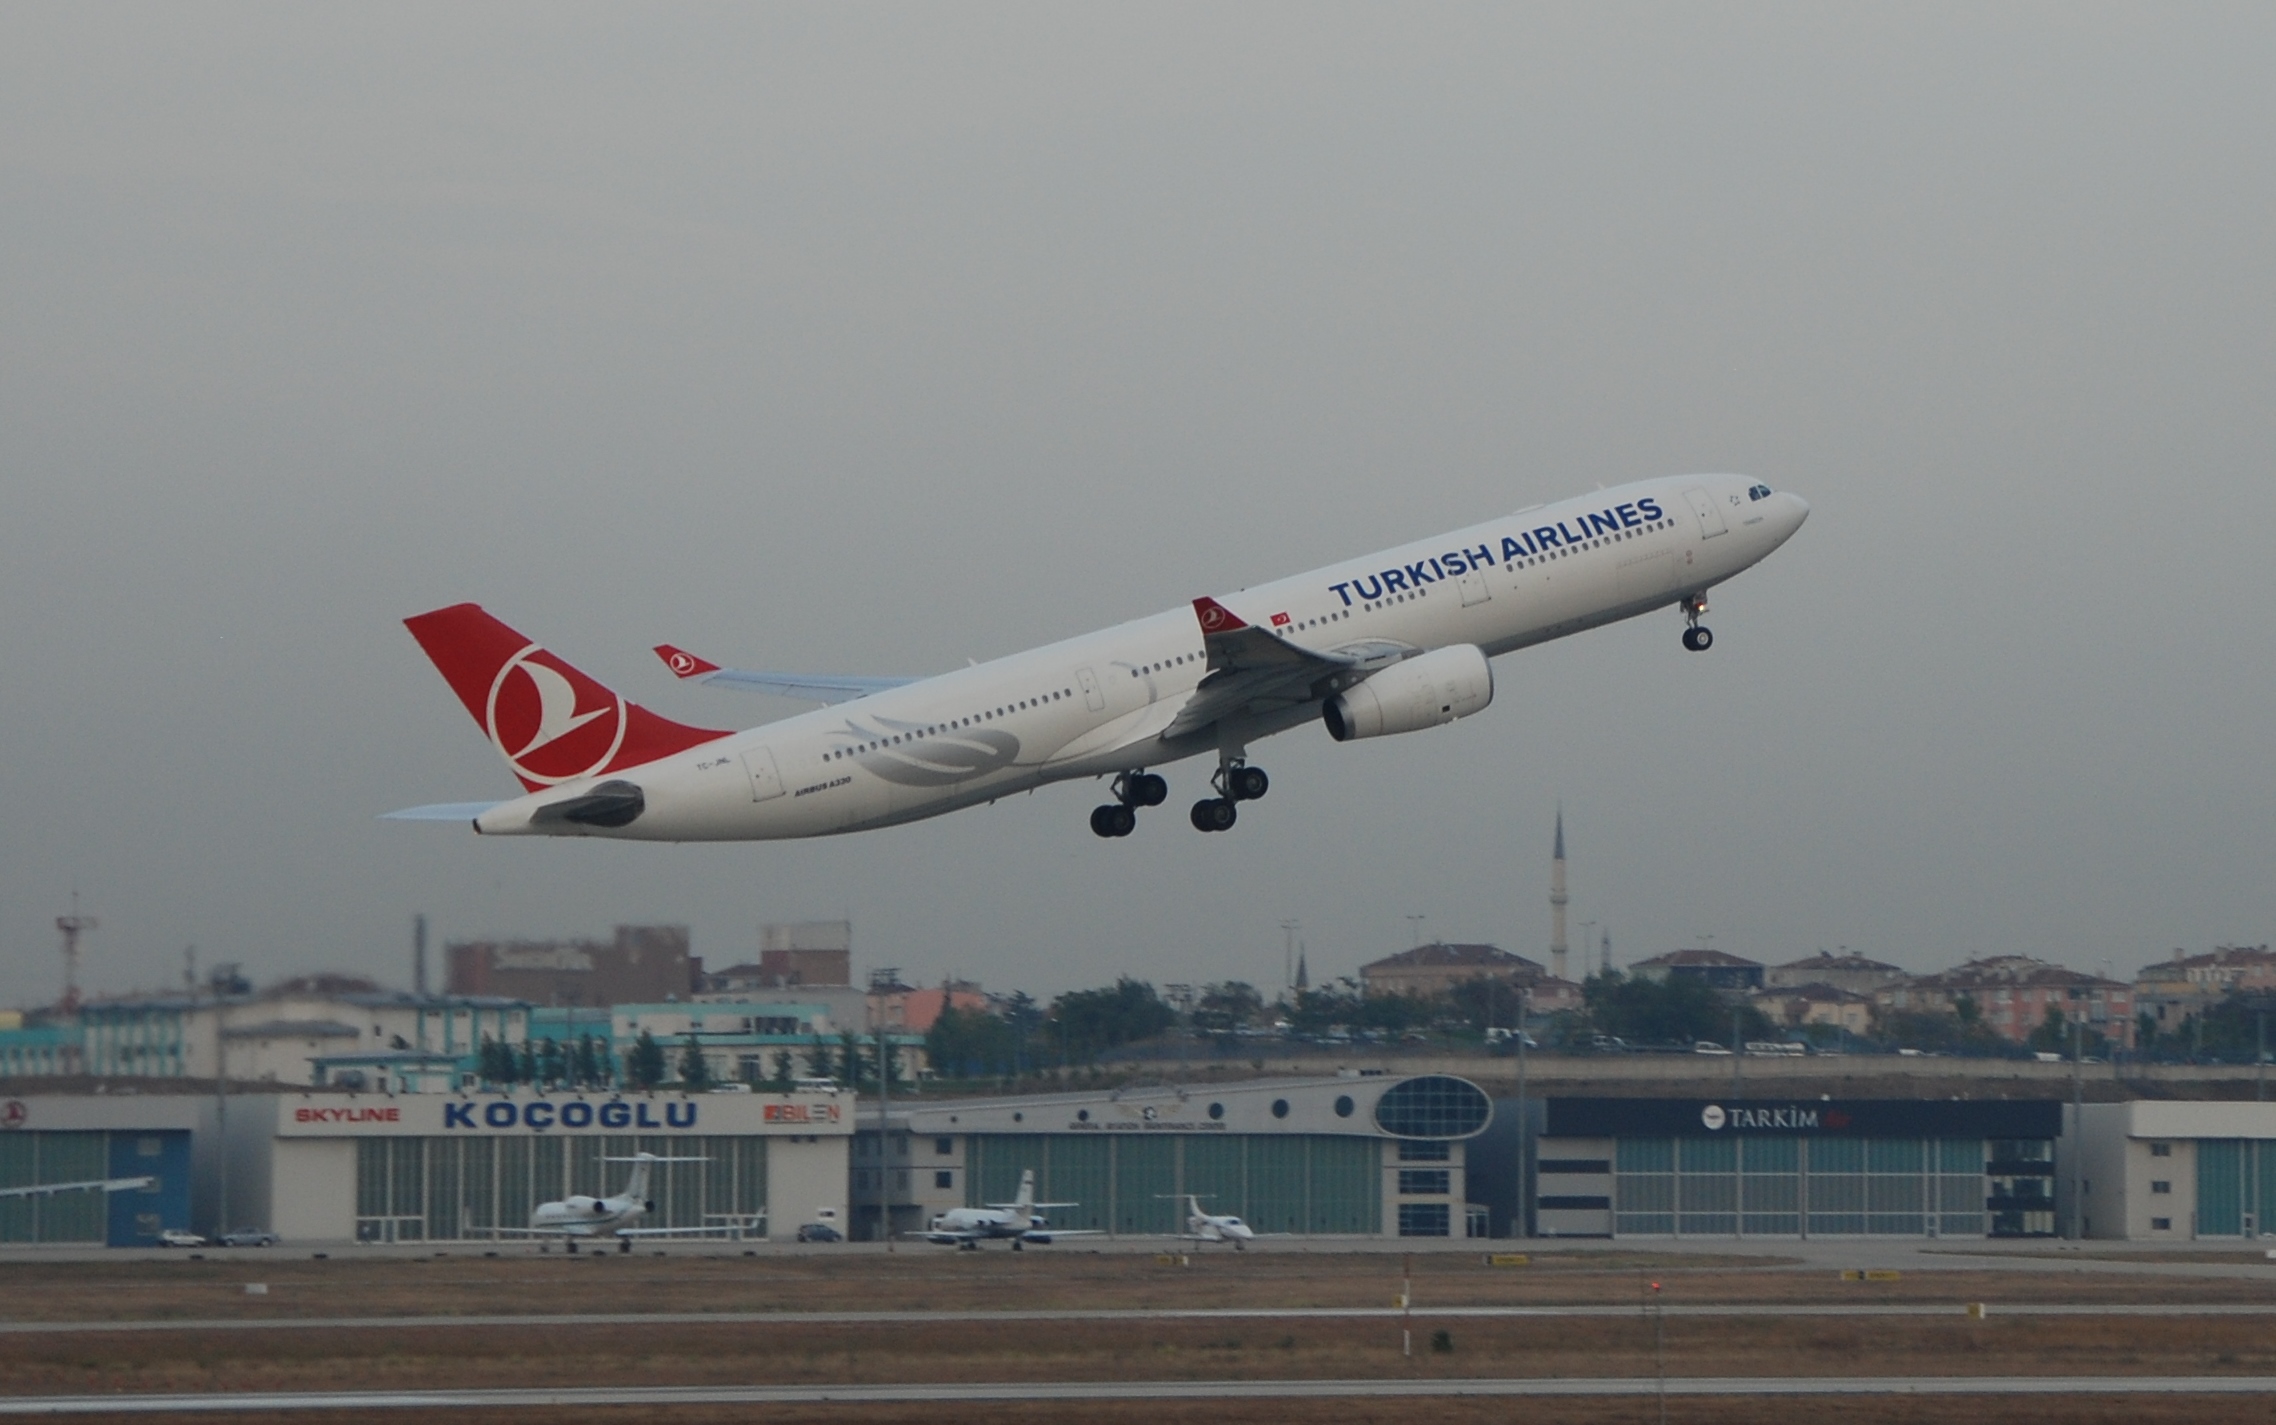 Spotting Turkish Airlines @ Istanbul Ataturk Airport